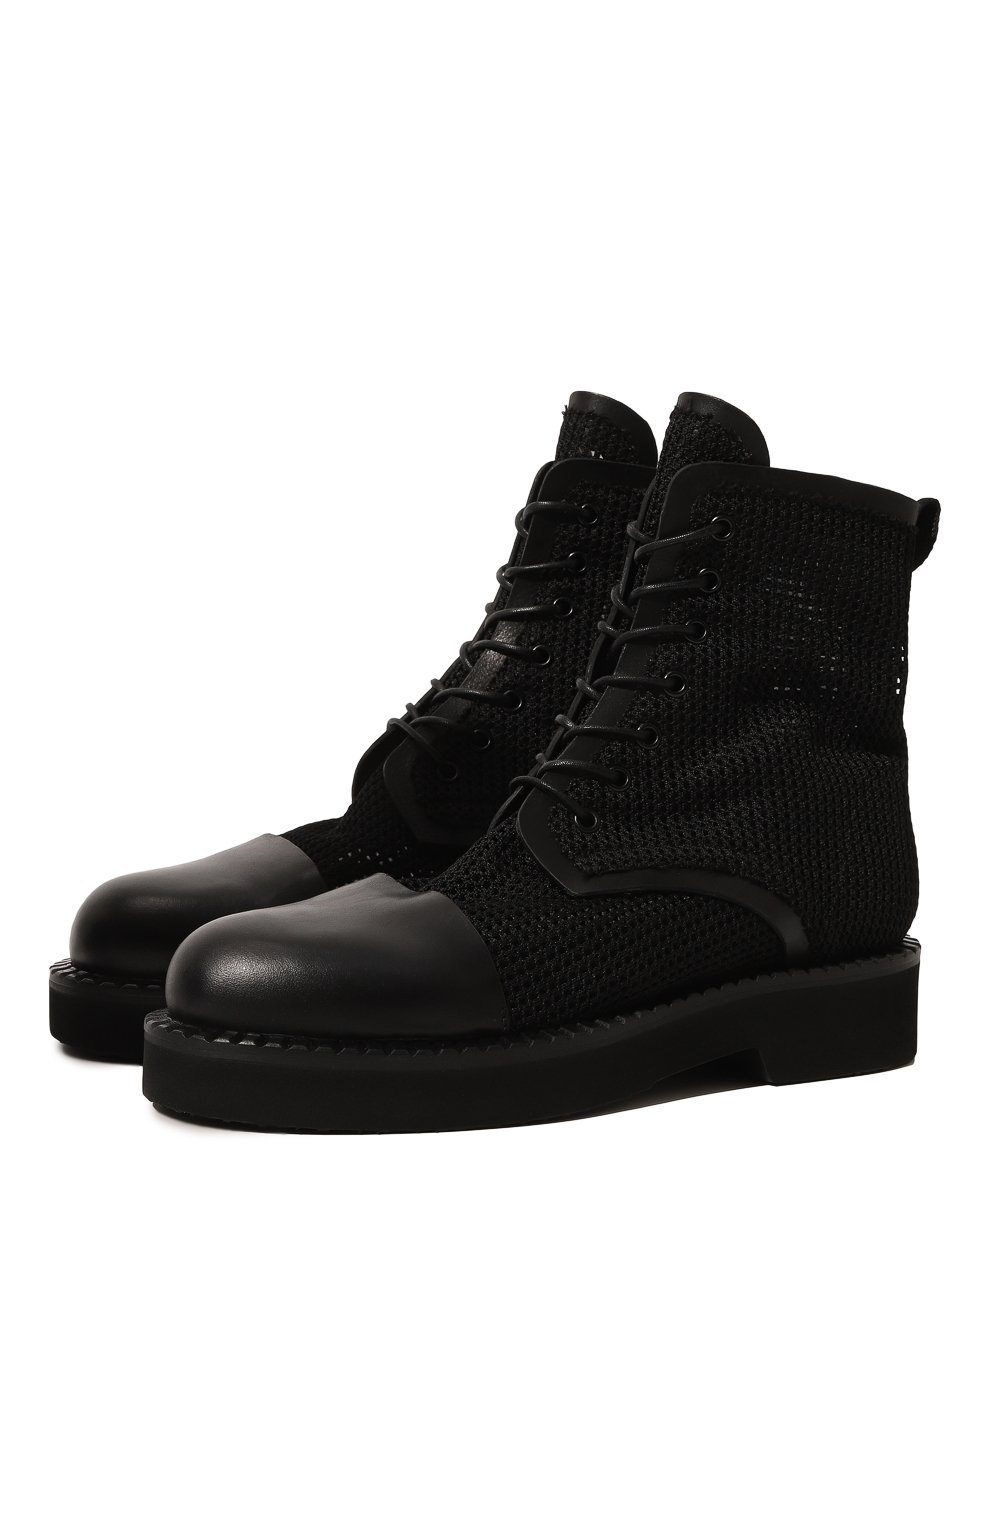 Комбинированные ботинки Premiata M6503/NEW R0DY YUK0N, цвет чёрный, размер 37